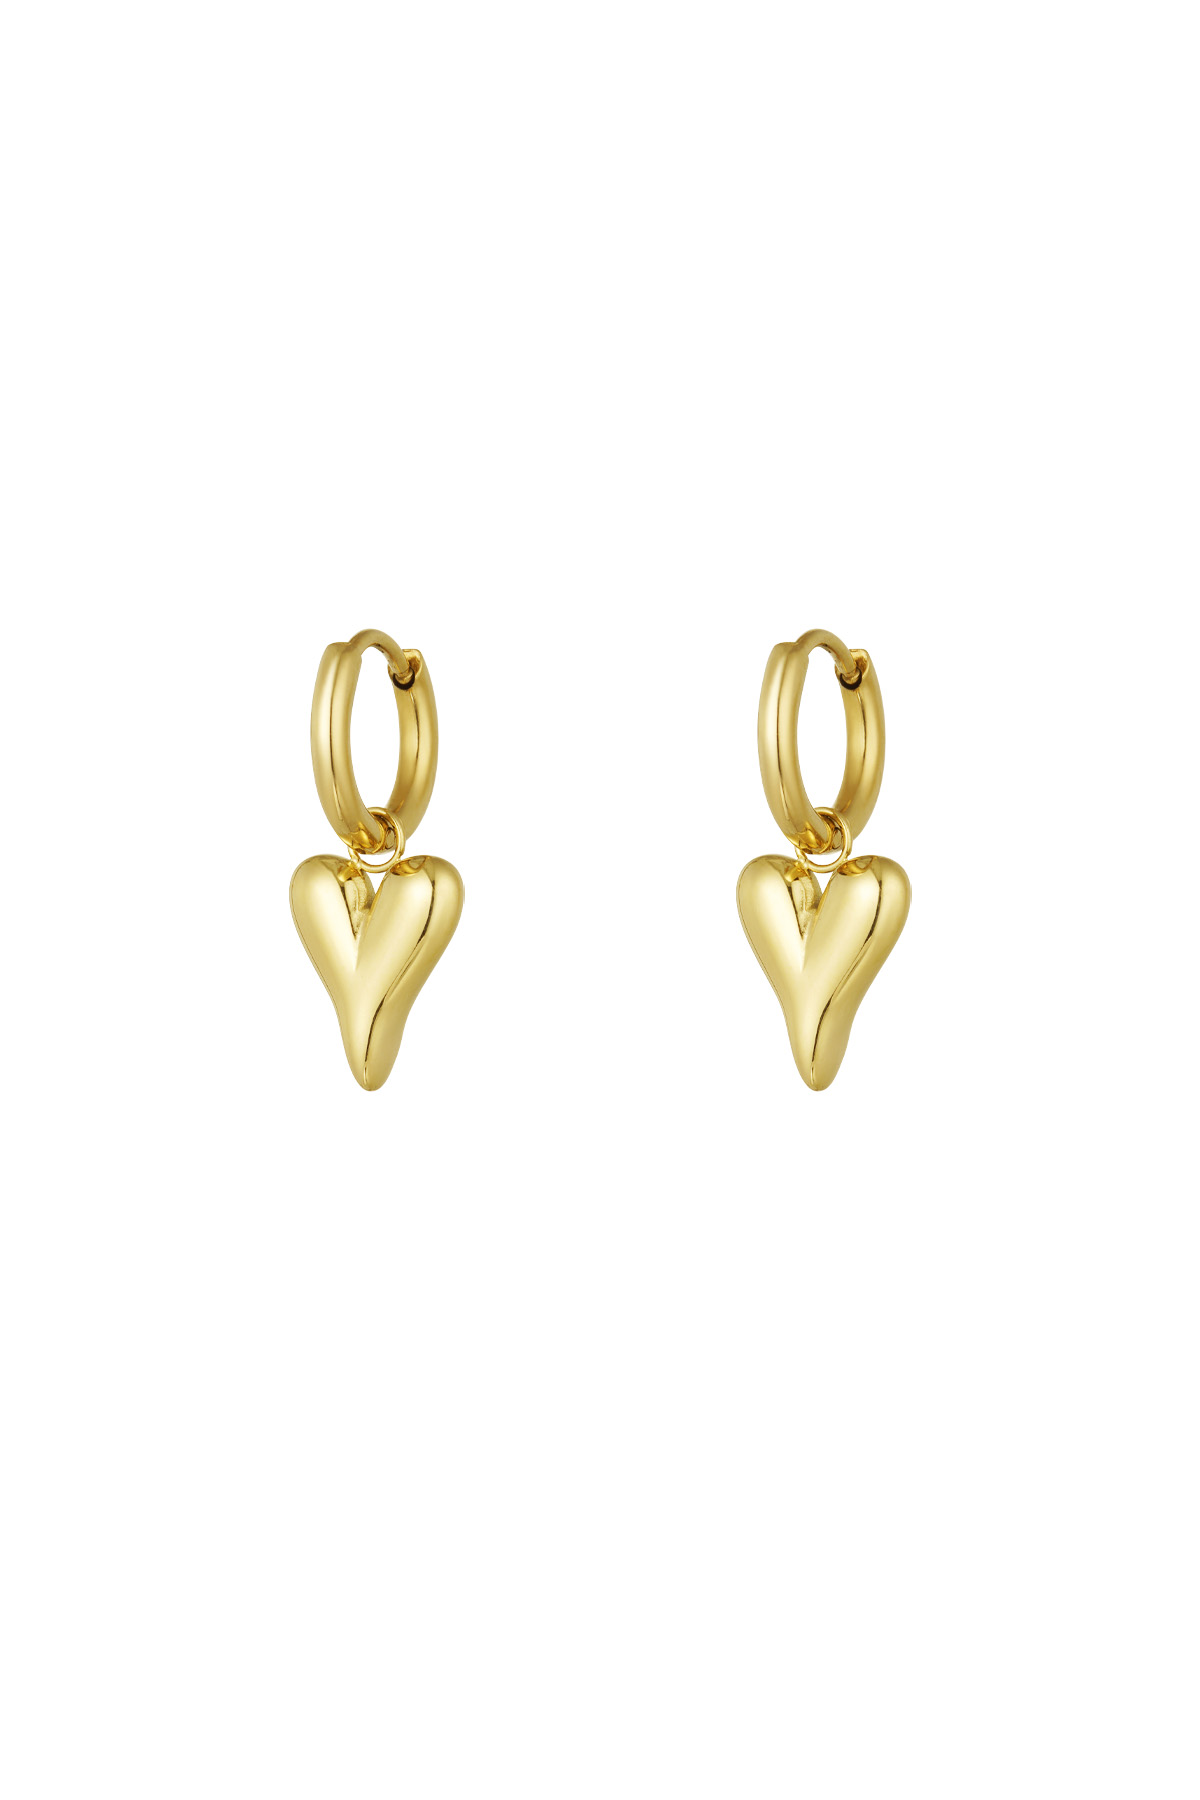 Stainless Steel Heart Shaped Earrings - Gold h5 